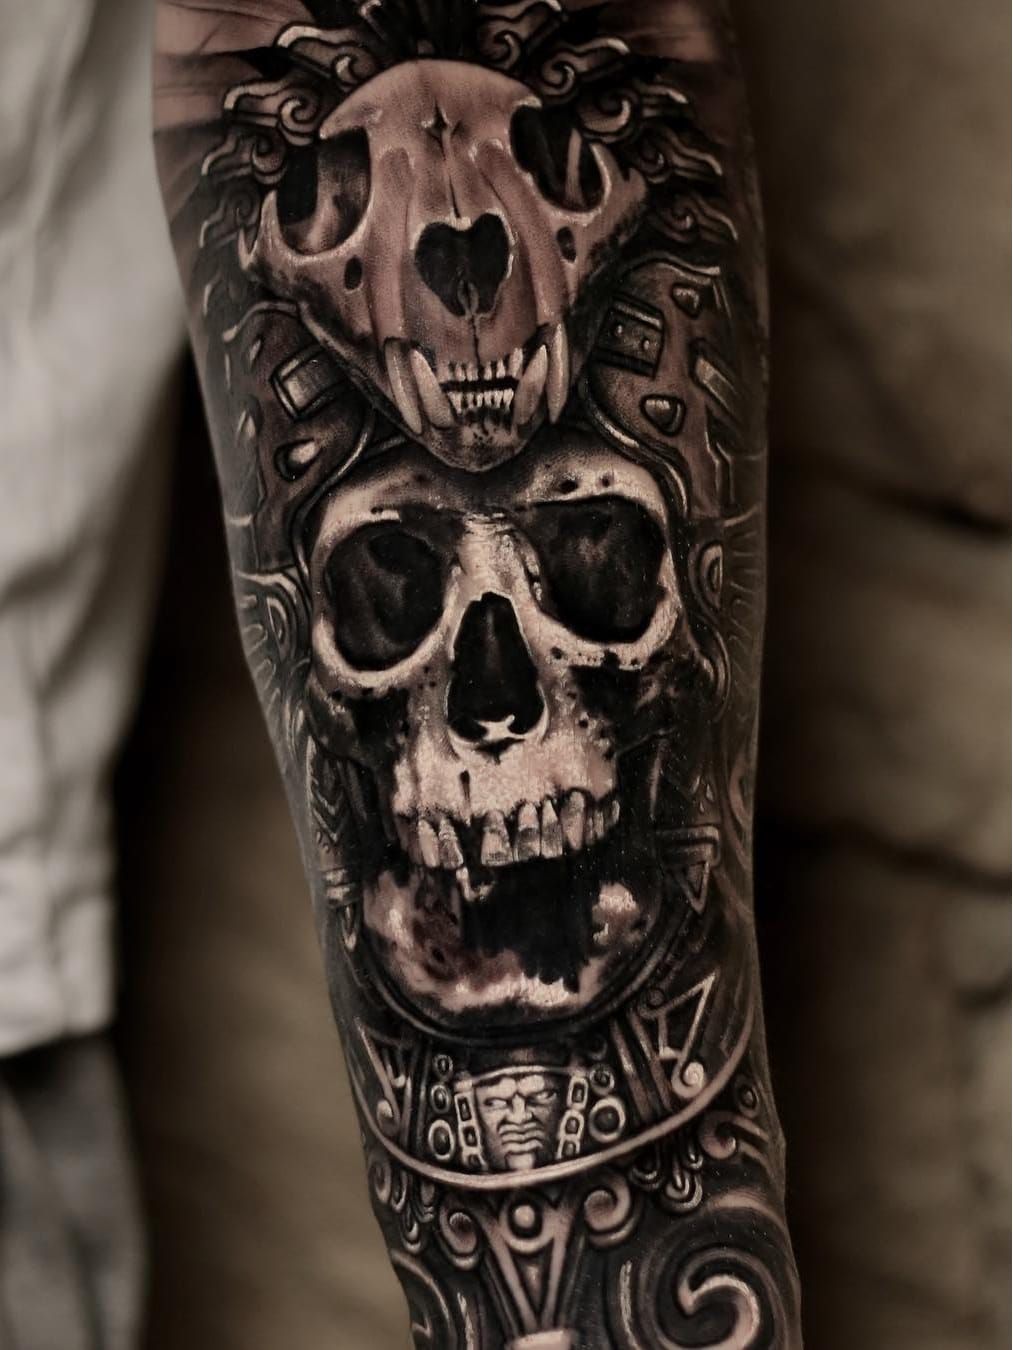 125 Masculine Aztec Tattoo Ideas Trending Right Now  Wild Tattoo Art